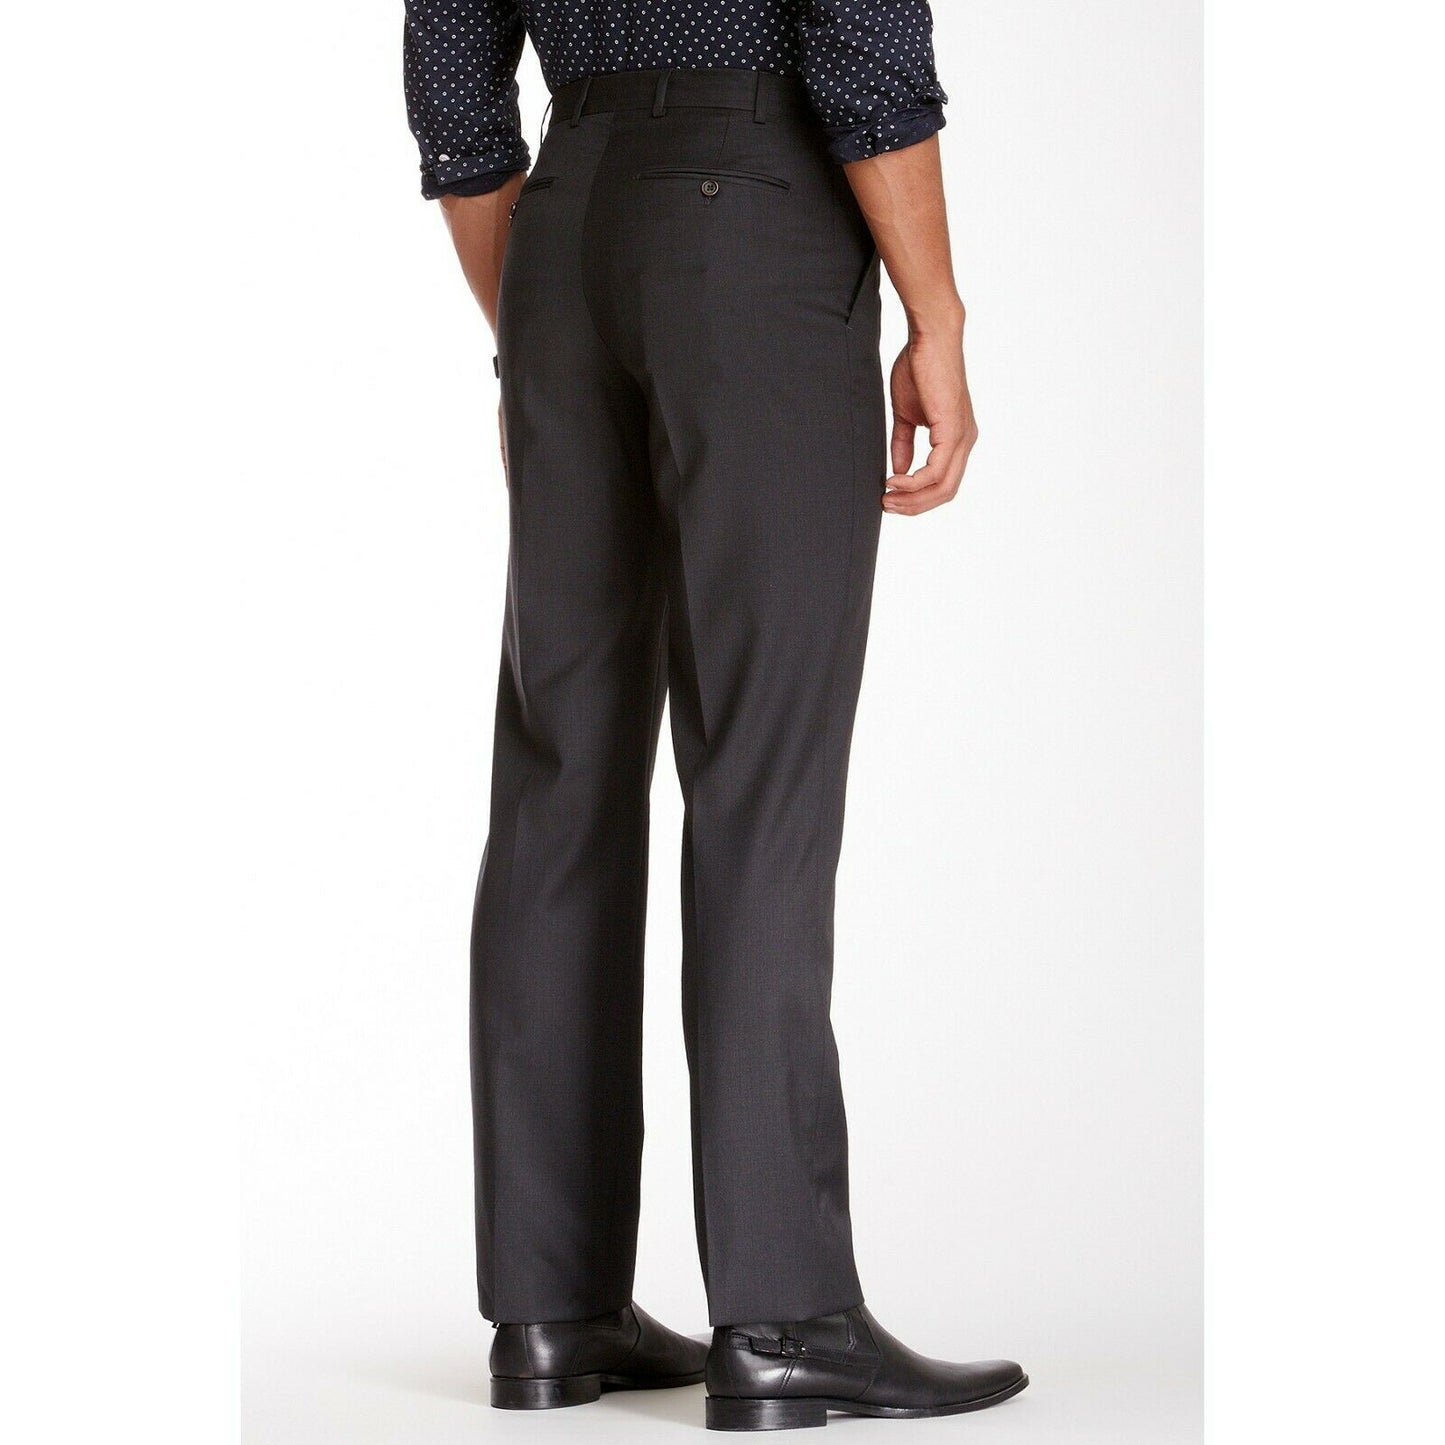 Ike Behar Mens Charcoal Grey Wool Flat Front Dress Suit Slacks Pants 36 NWT